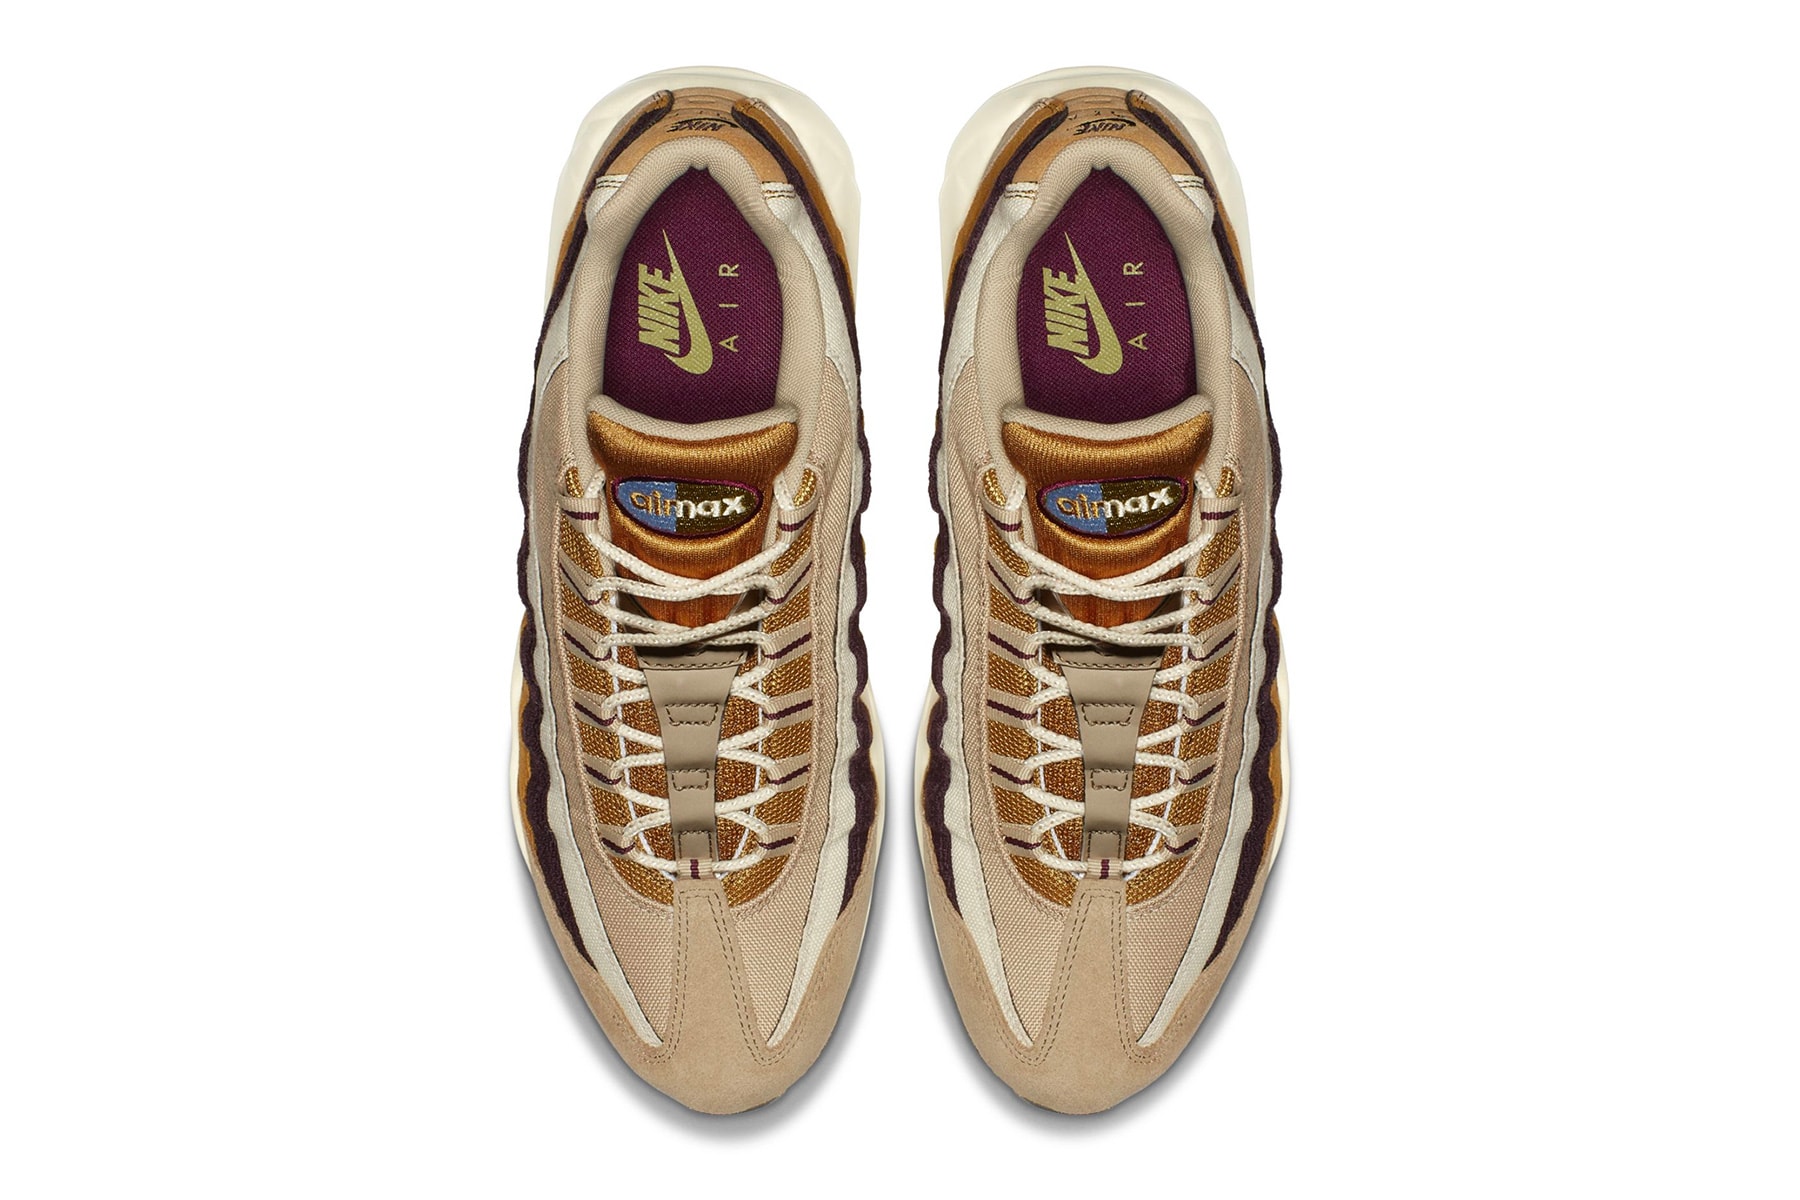 Nike Air Max 95 "Desert/ Royal Tint" sneaker release brown suede gold price